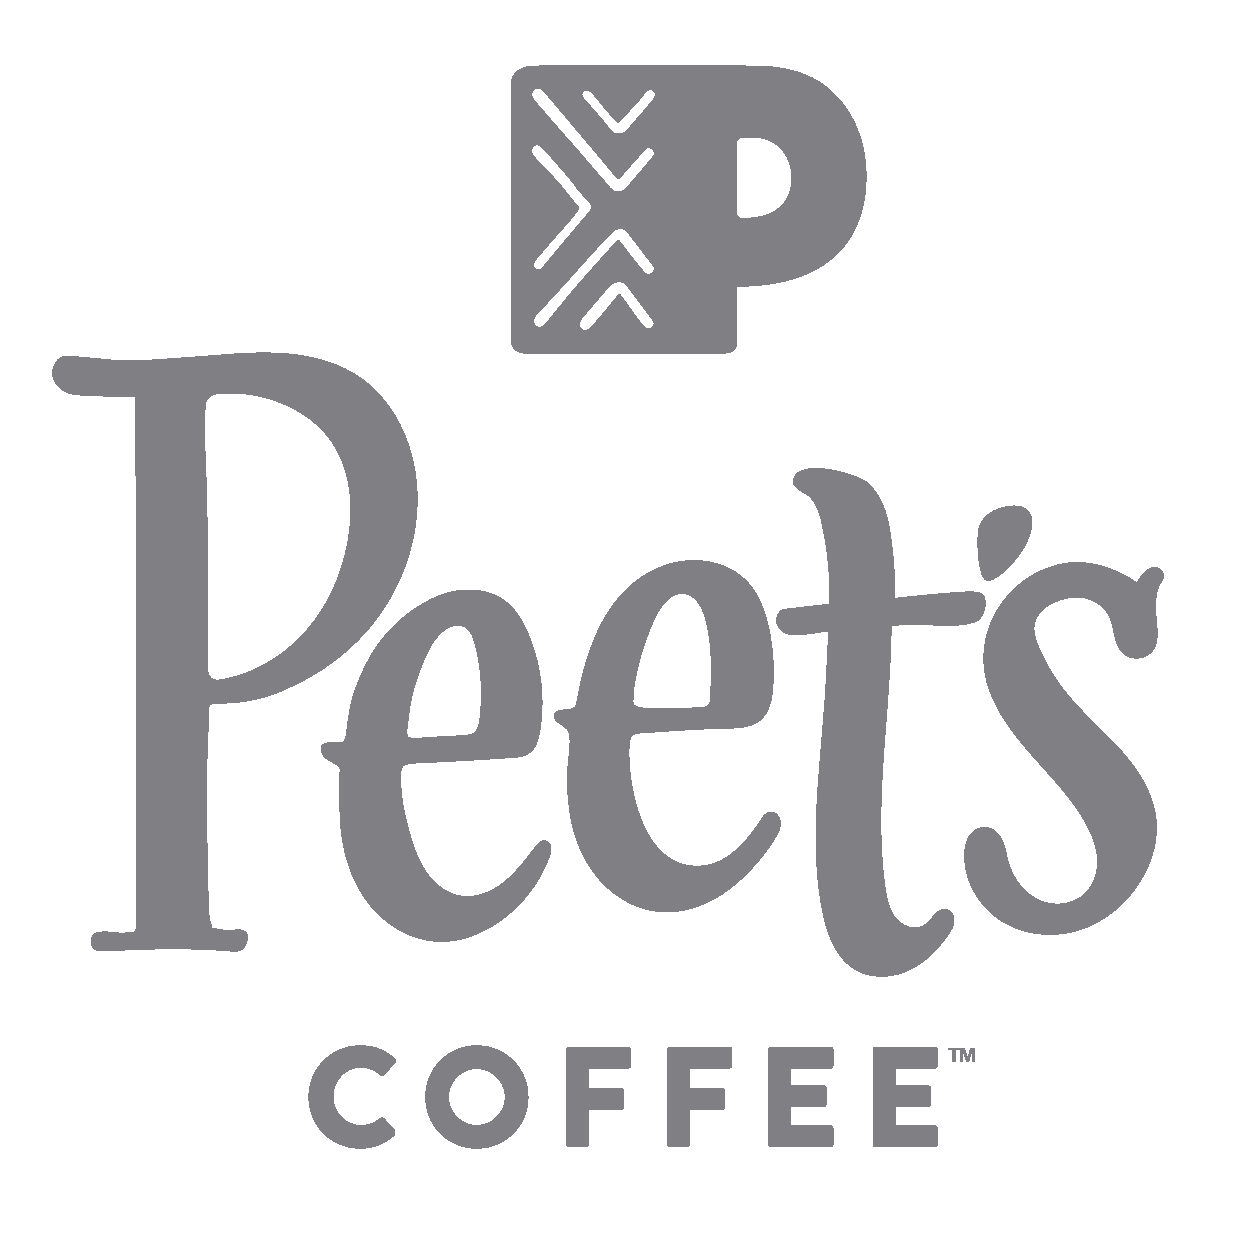 peets_coffee.png